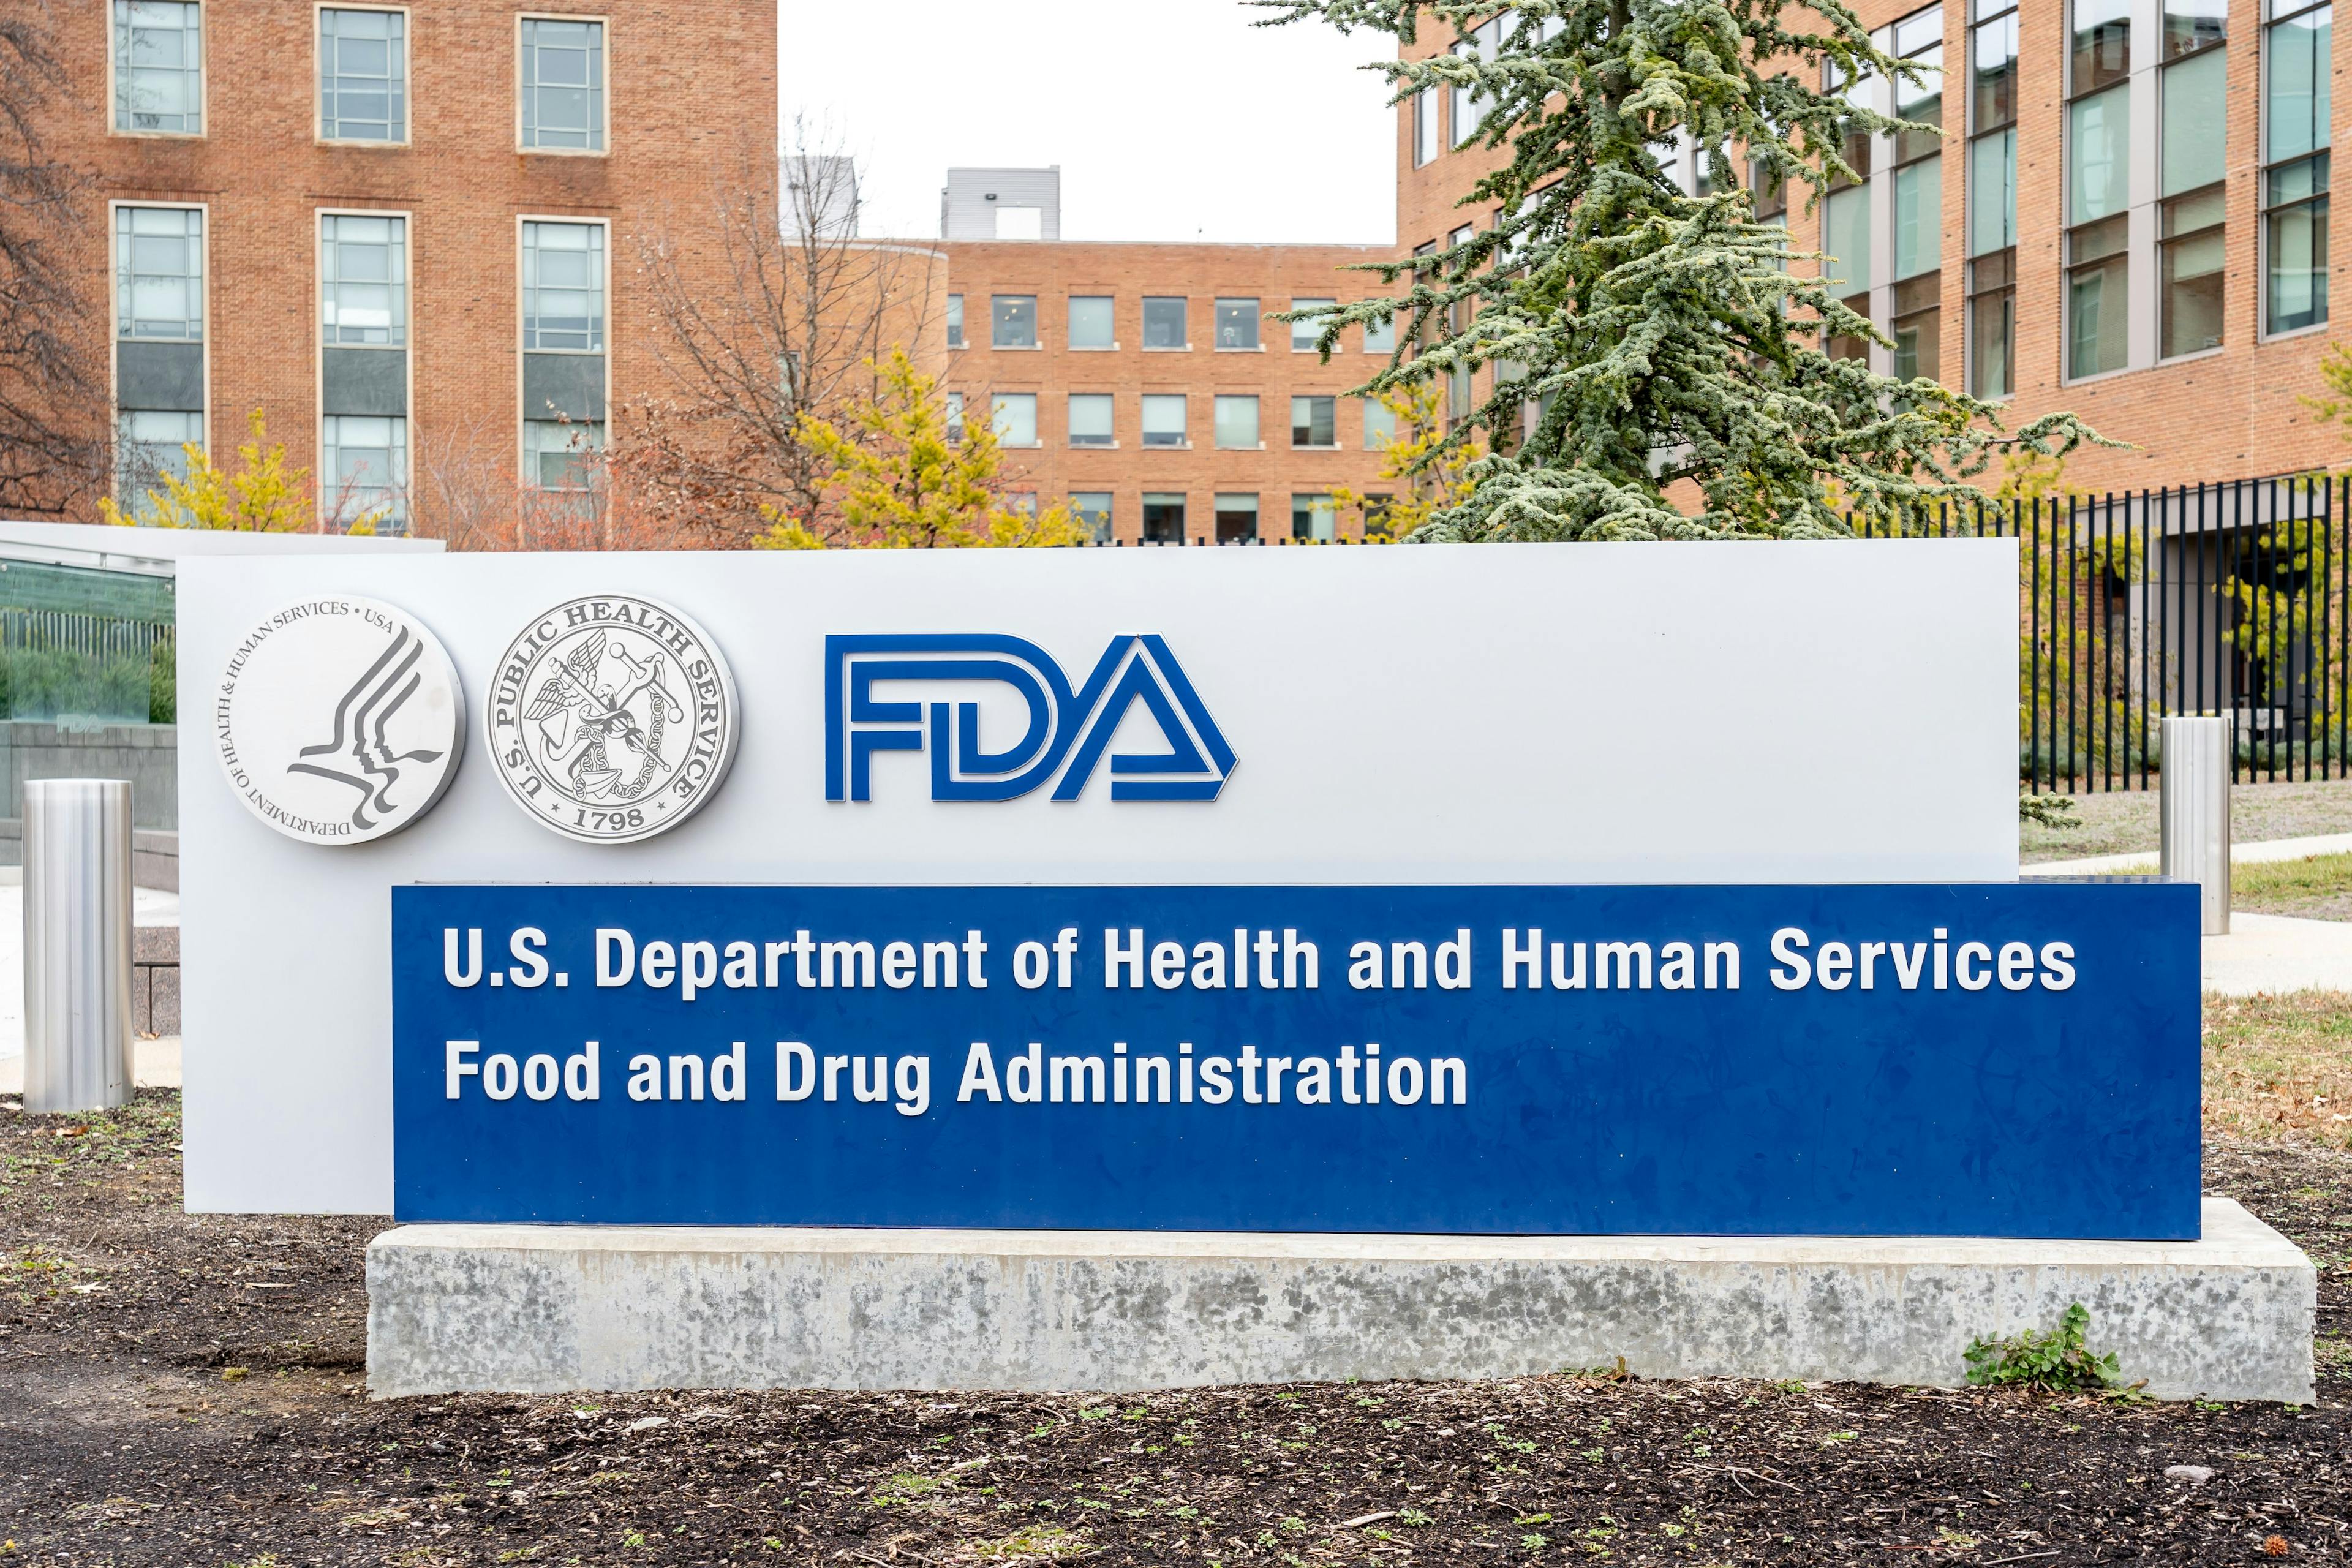 Cardiologist confirmed to head FDA